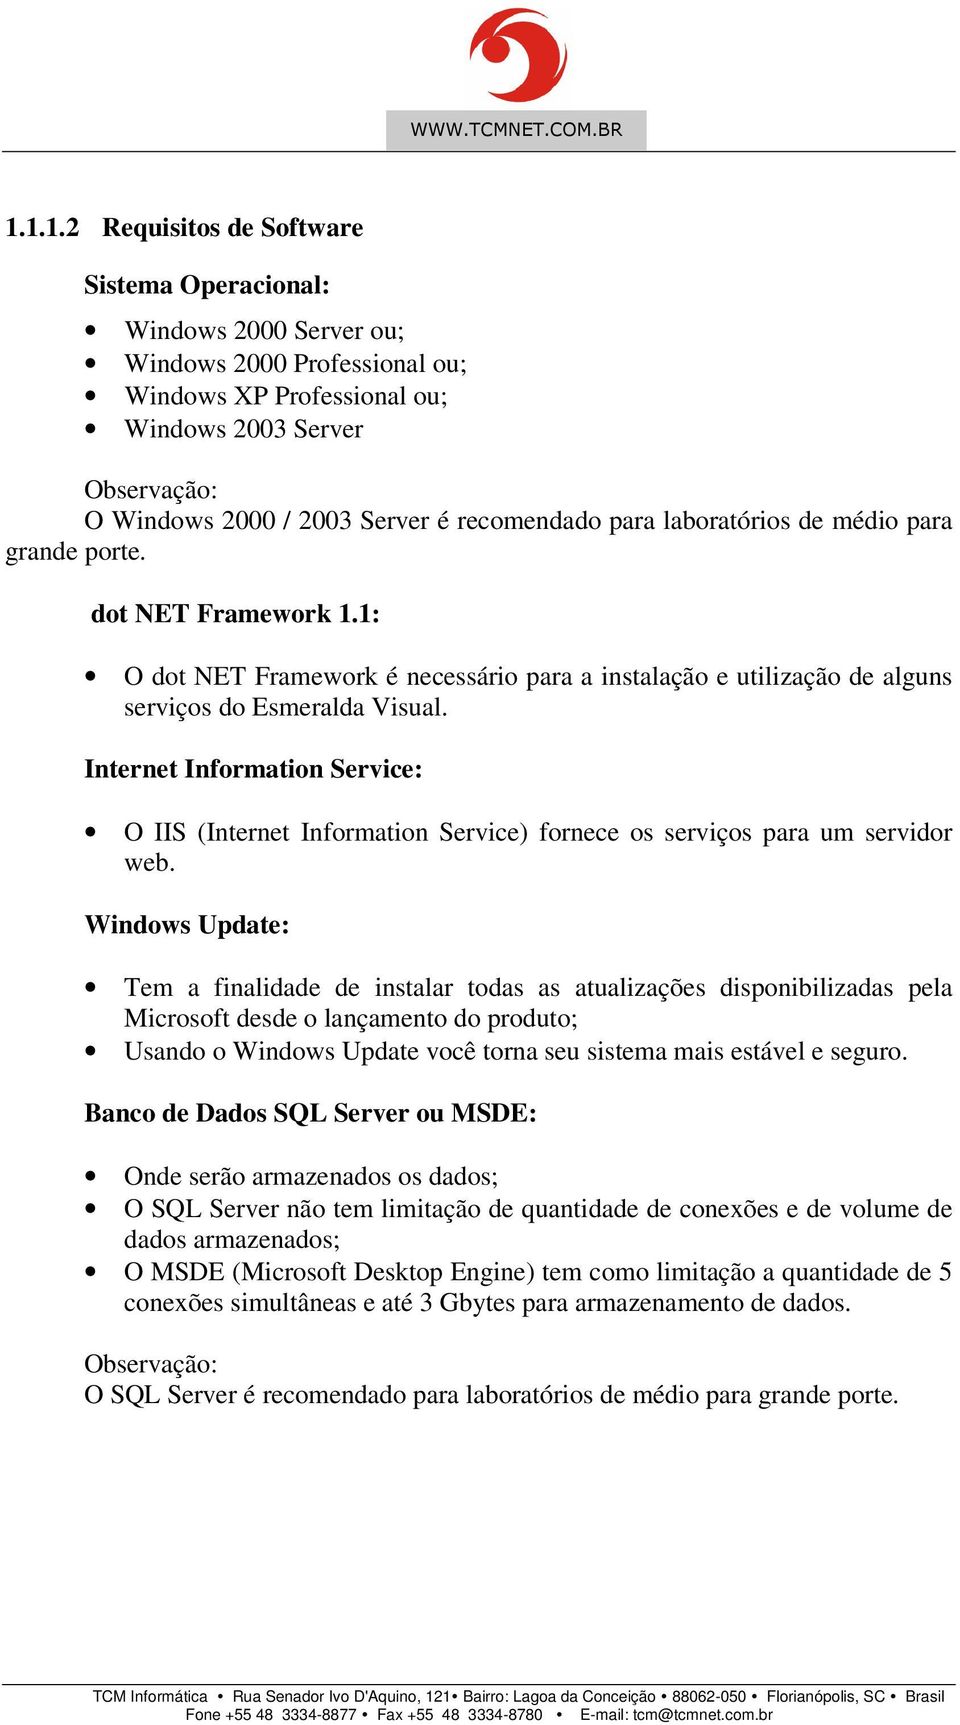 Internet Information Service: O IIS (Internet Information Service) fornece os serviços para um servidor web.